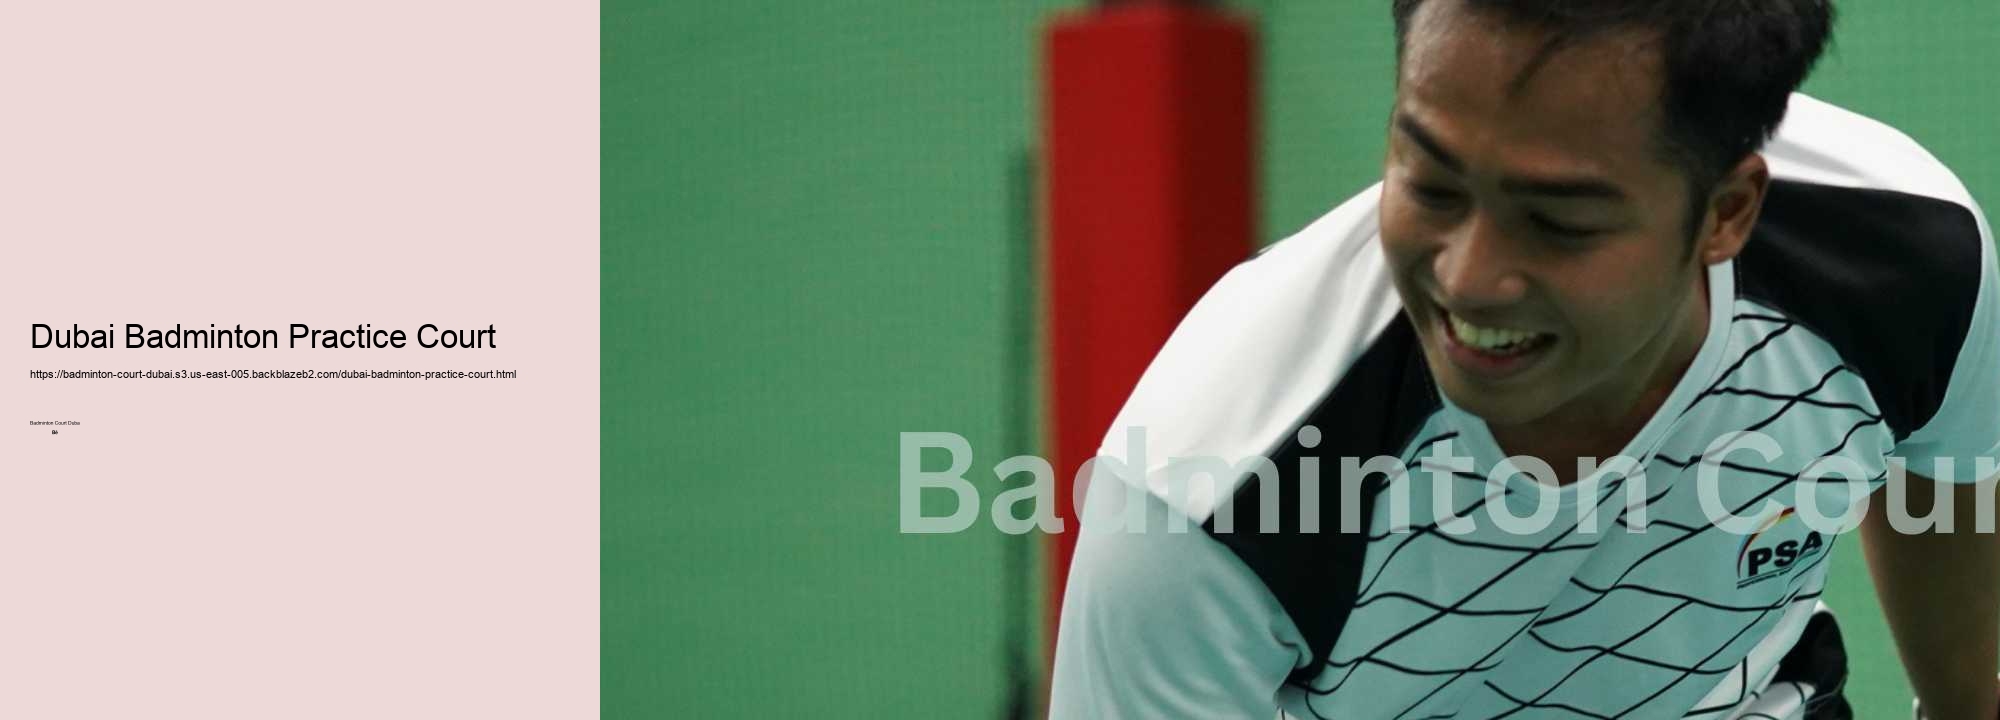 Dubai Badminton Practice Court